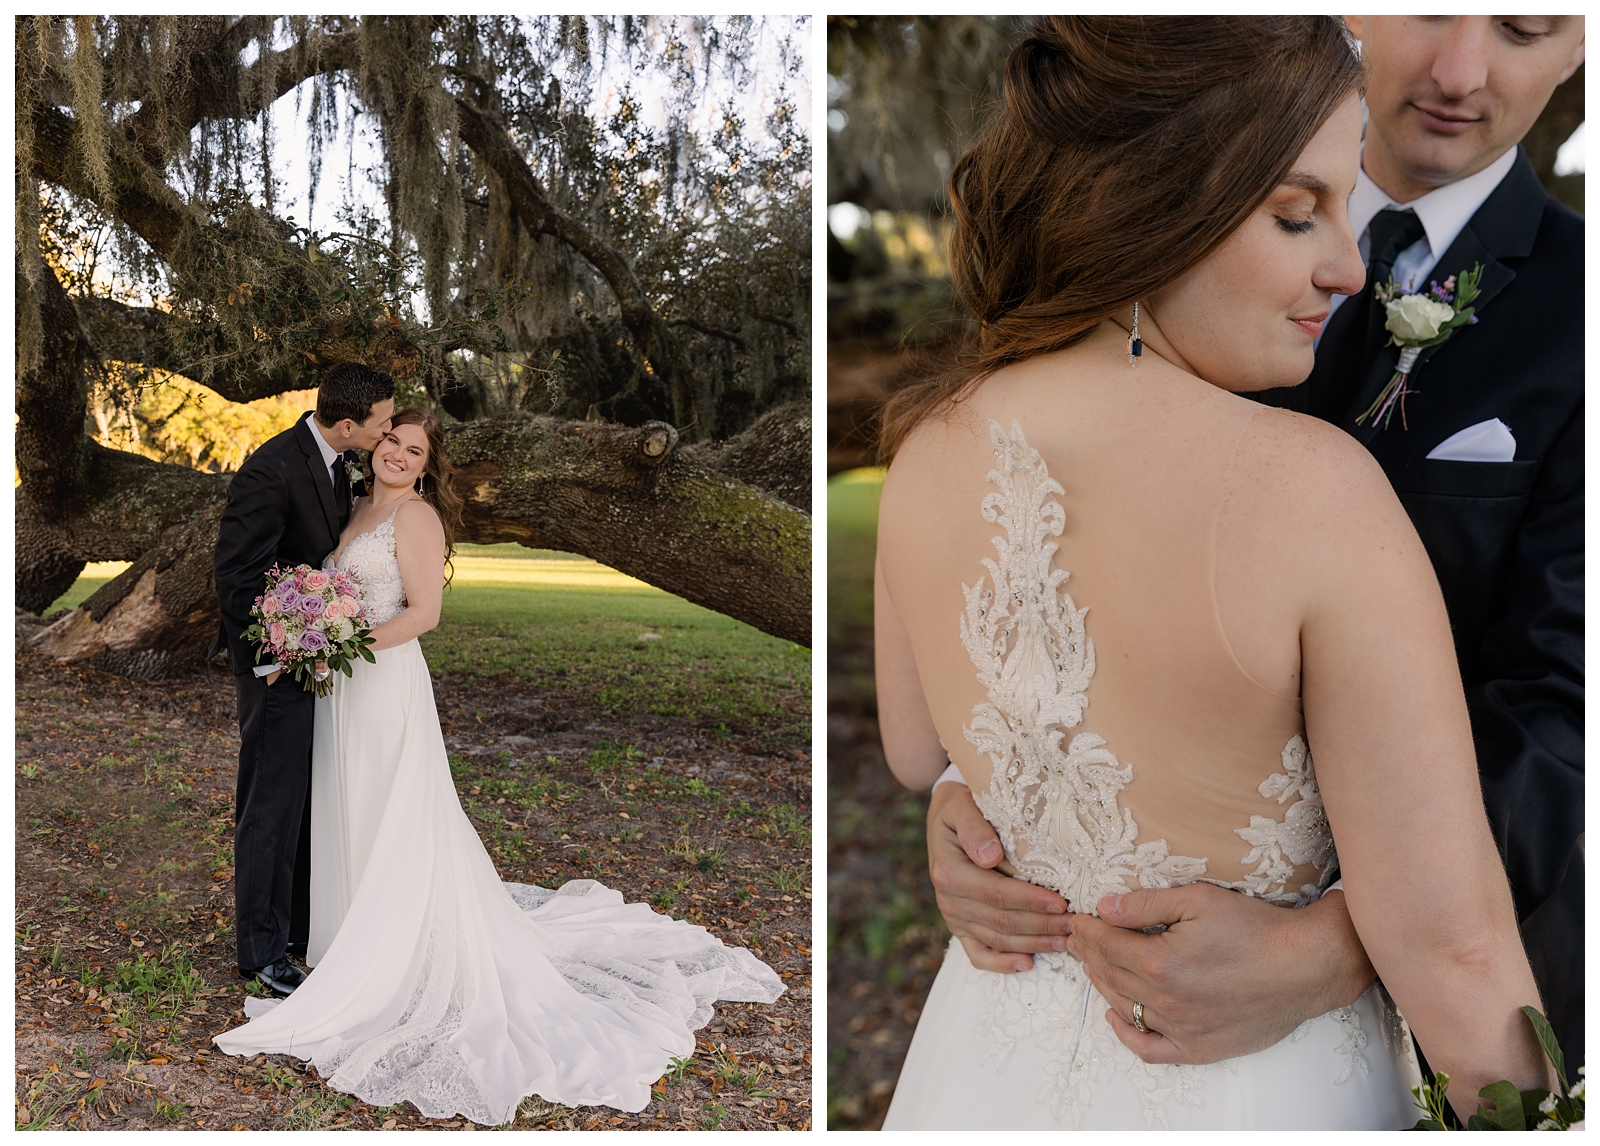 Orlando wedding photographers